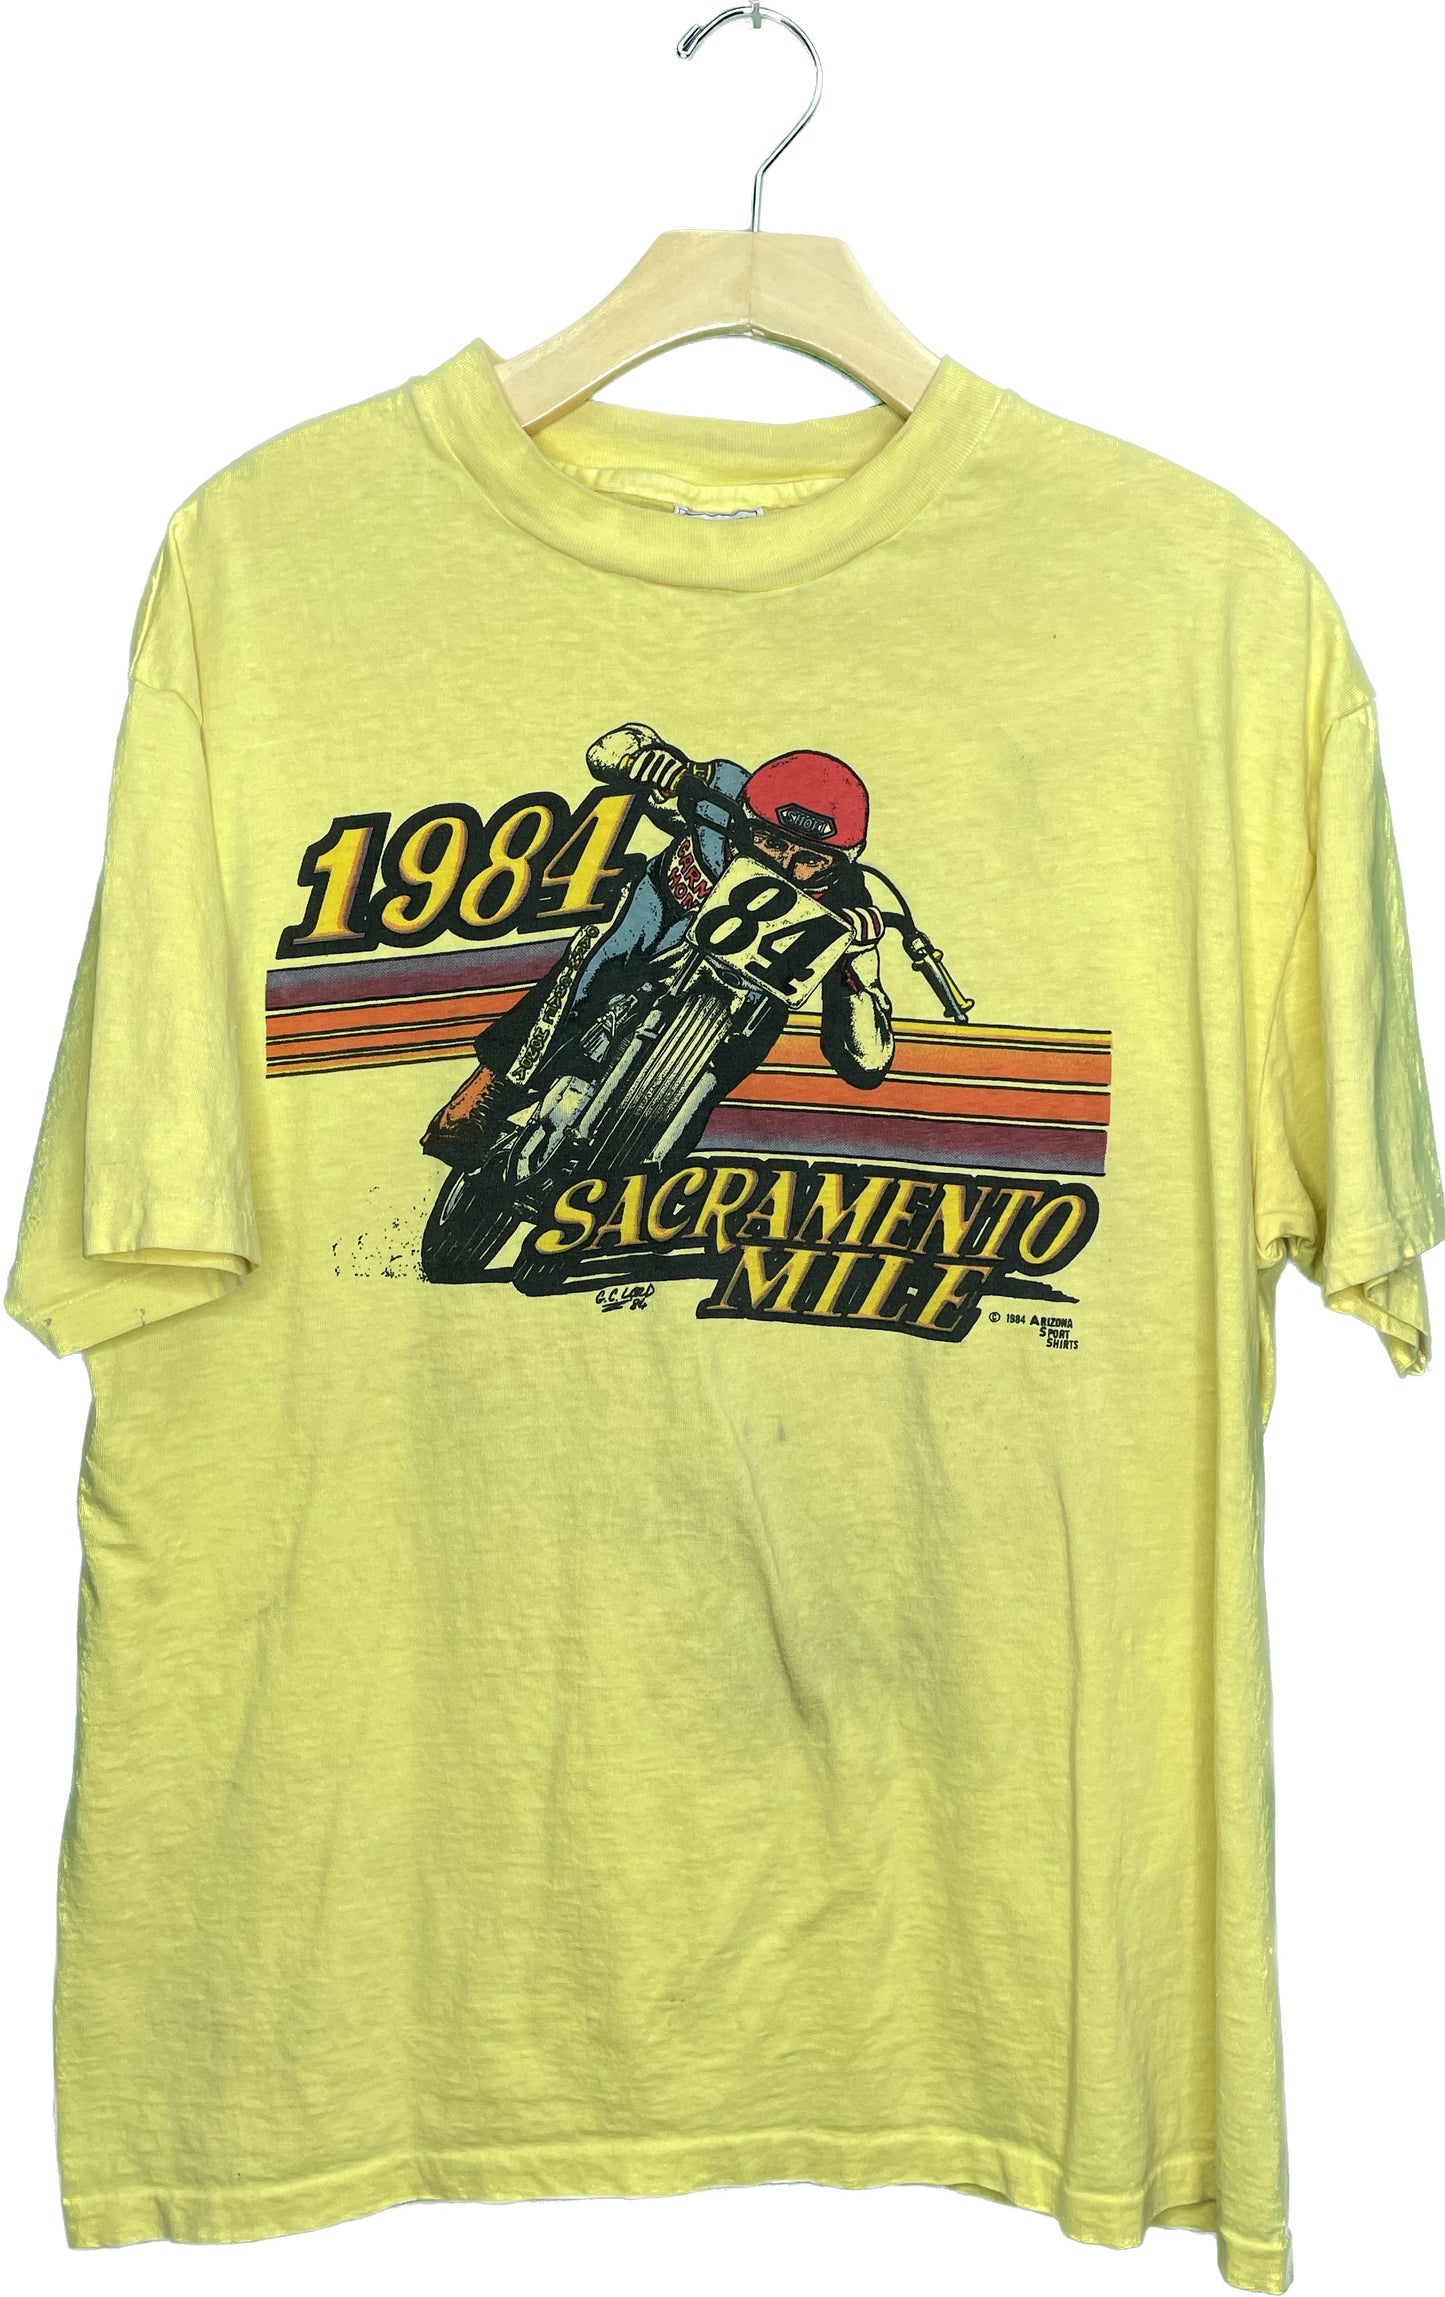 Vintage L/XL 1984 Sacramento Mile Motocross T-Shirt Paper Thin